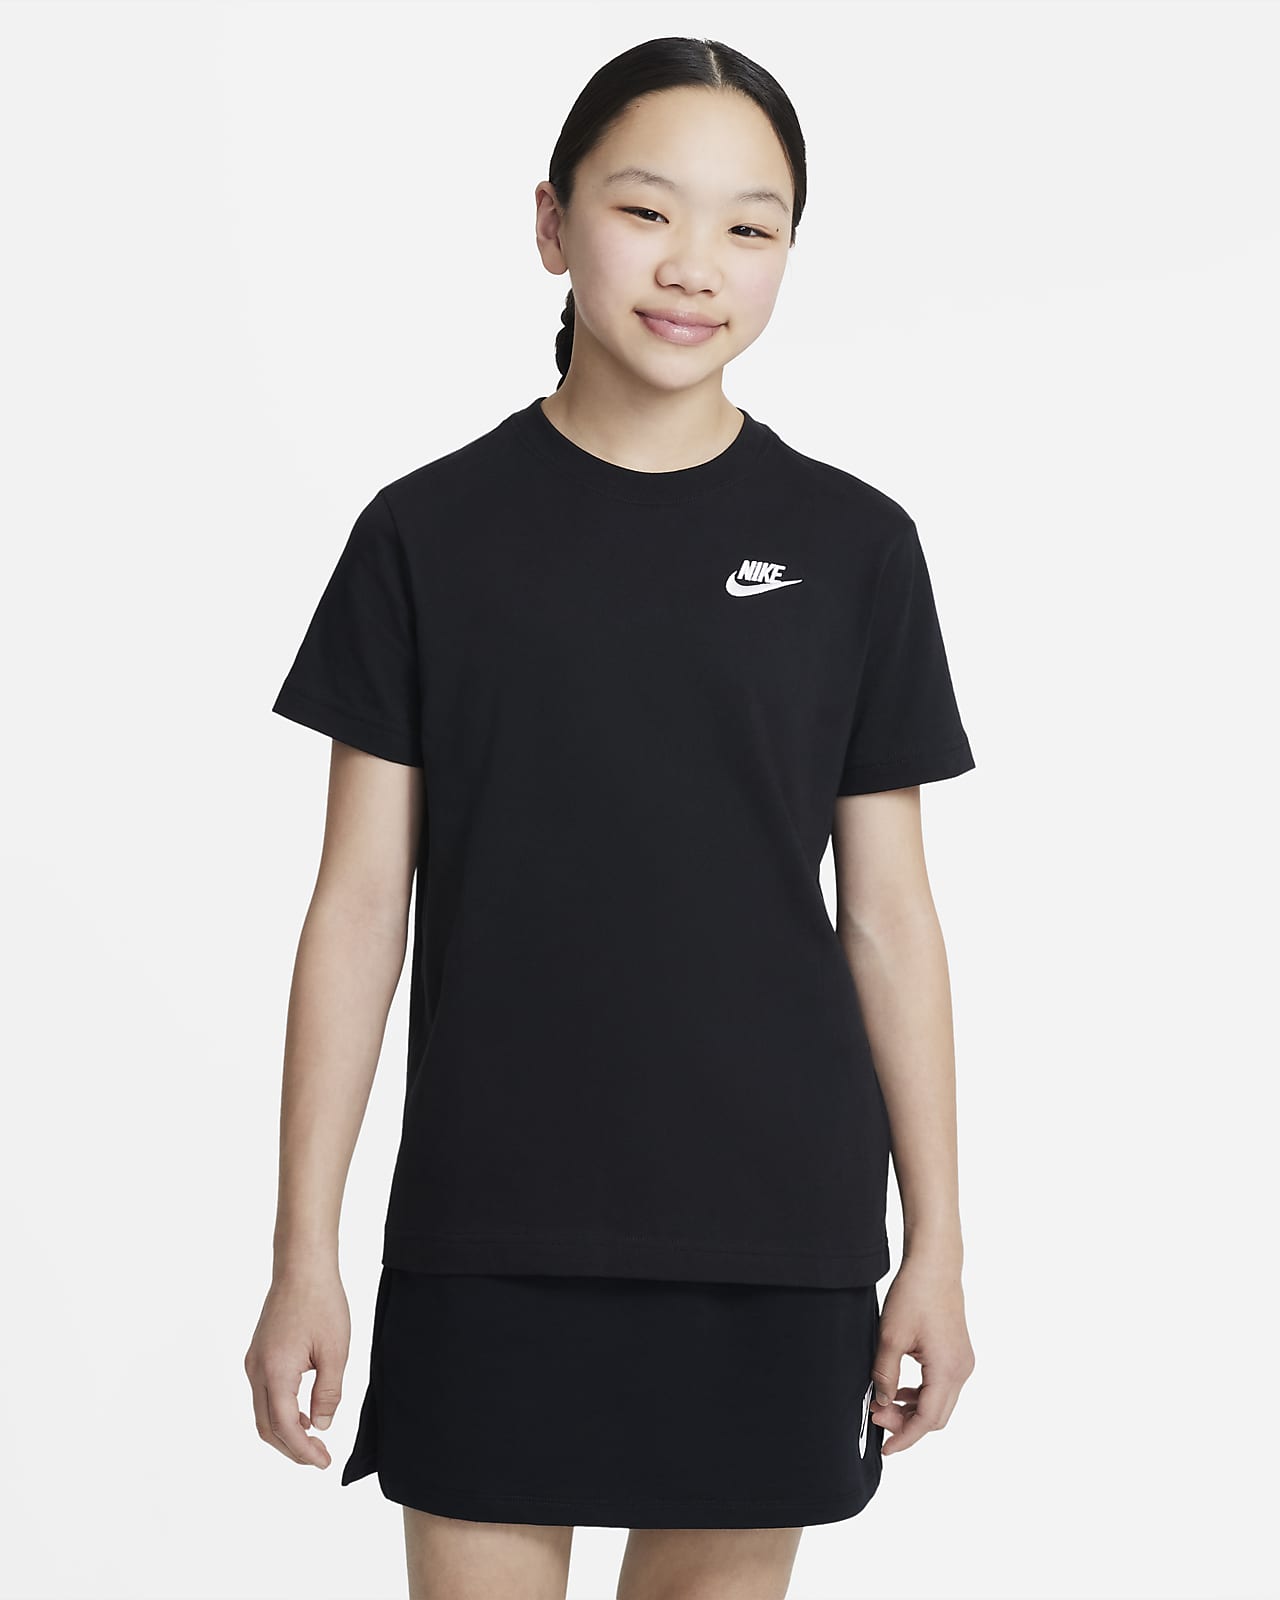 Nike Sportswear Big (Girls\') T-Shirt. Kids